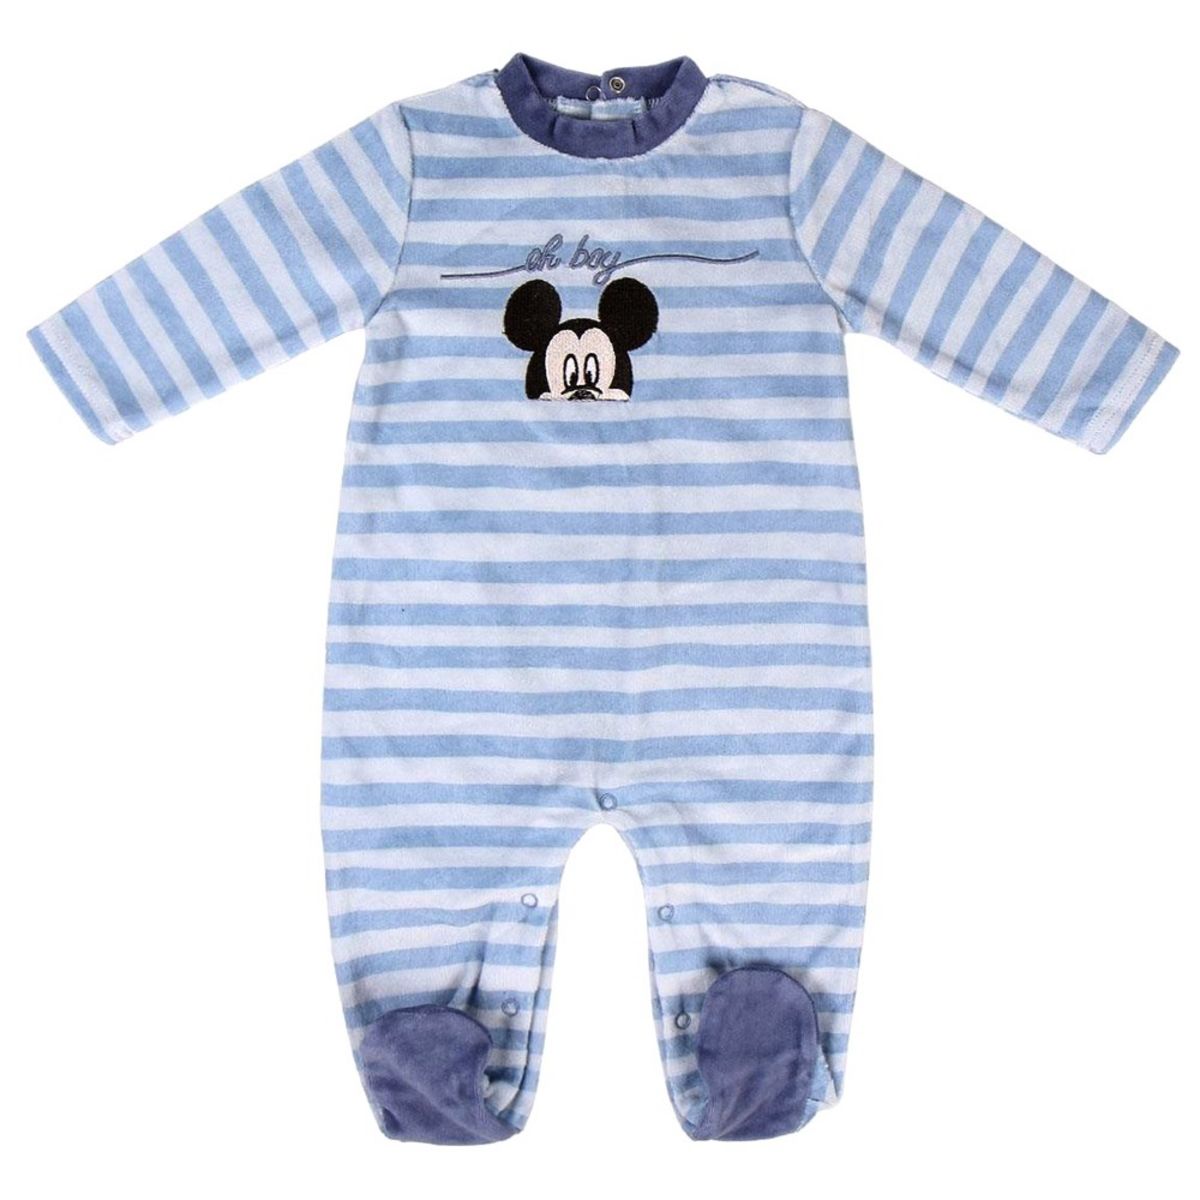  Dors bien Mickey taille 3 mois Pyjamas bebe cadeau naissance